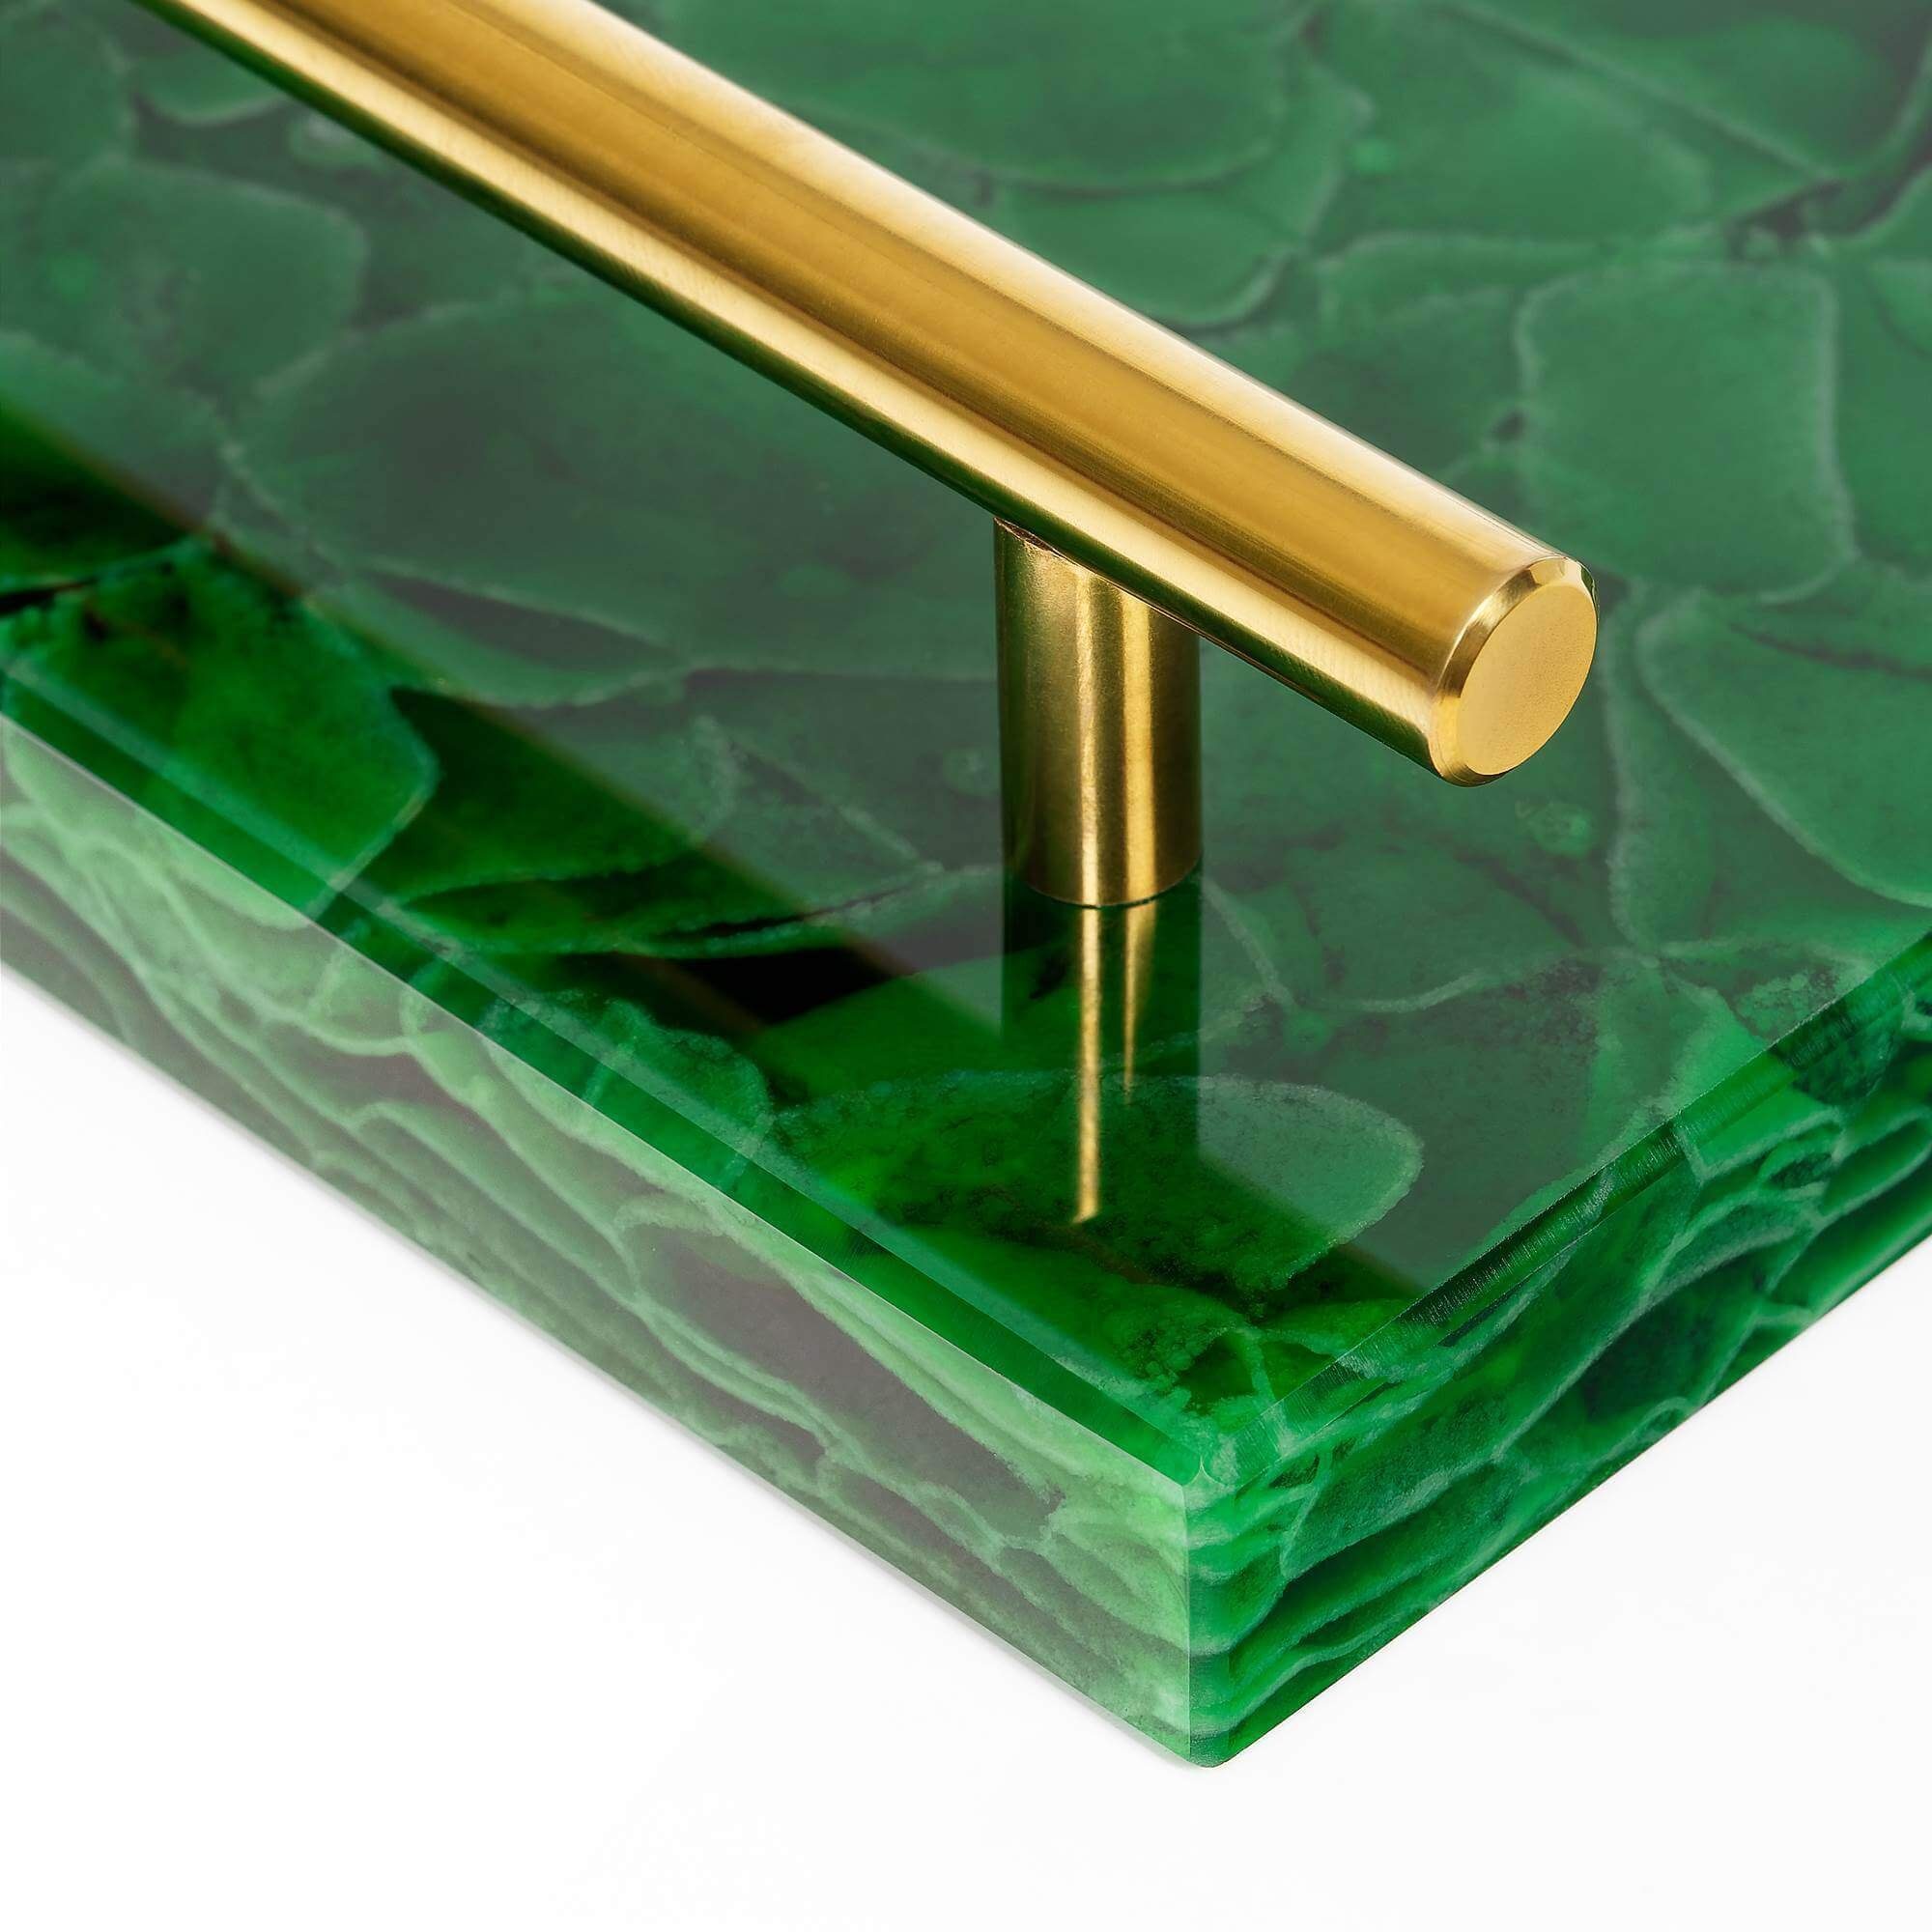 MAGNA Atelier Forest Green Tablet, NOTTING Dekotablett silber mit Metallgestell, 30x17x5cm gold HILL GLASKERAMIK